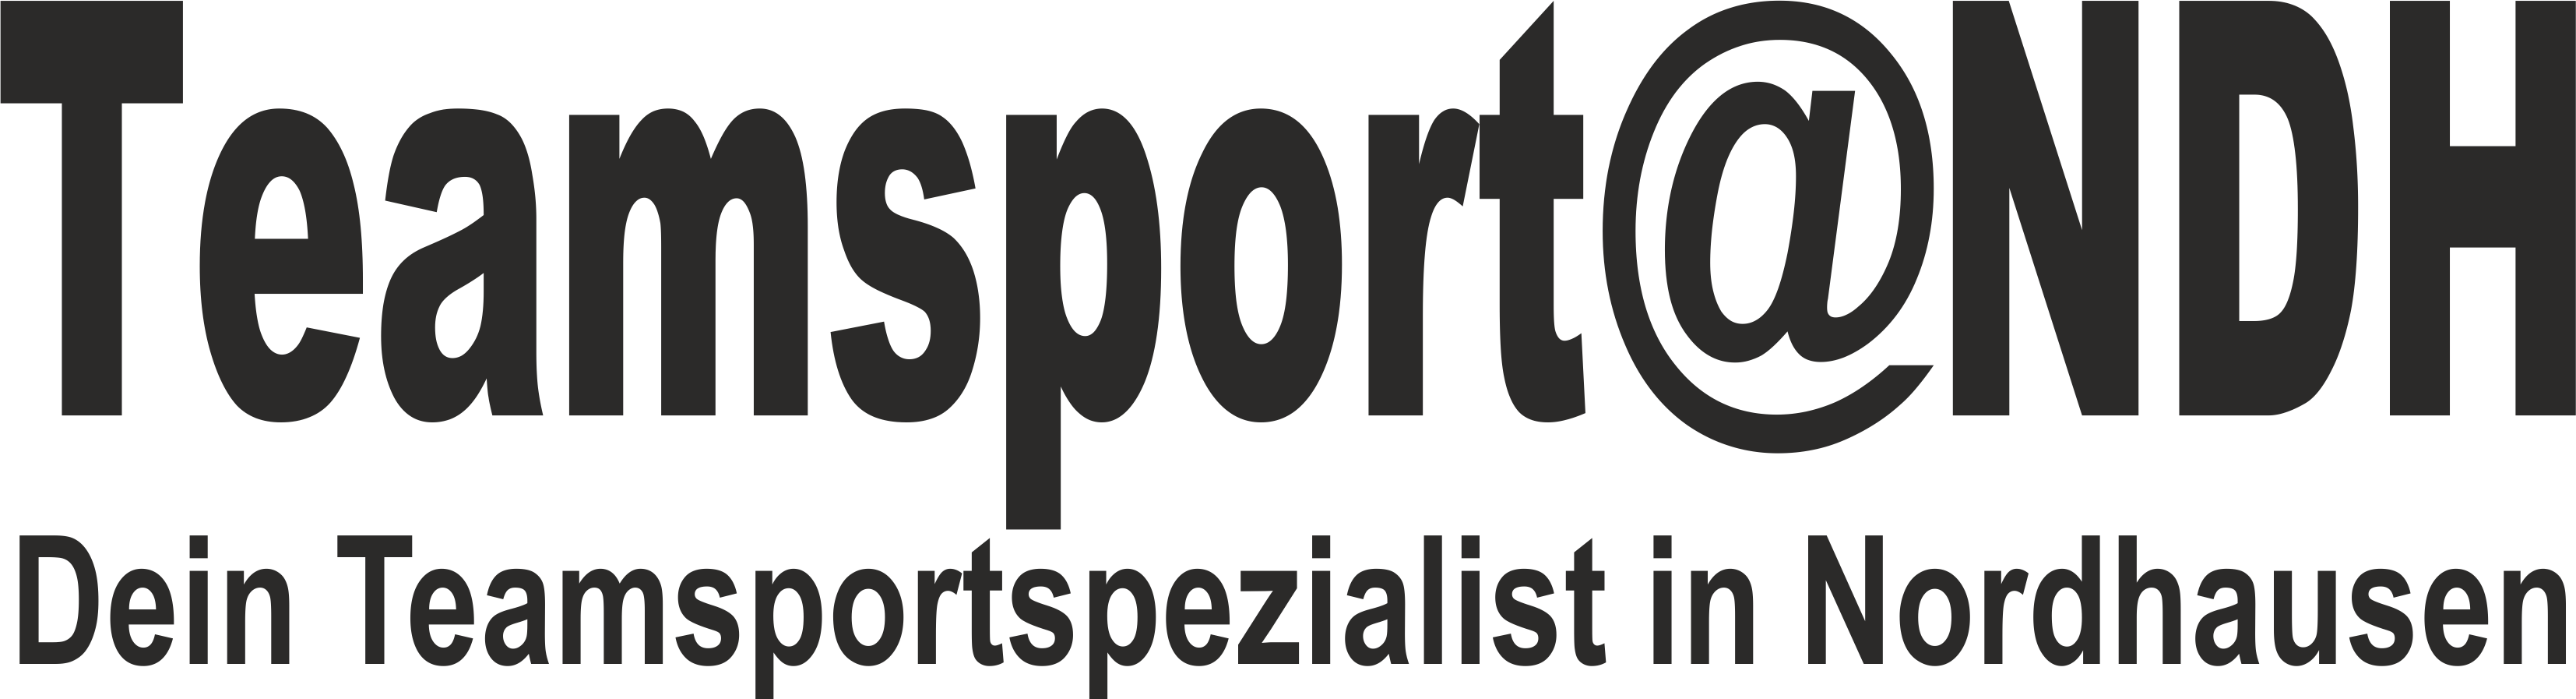 MORE ESPRIT Logo 2